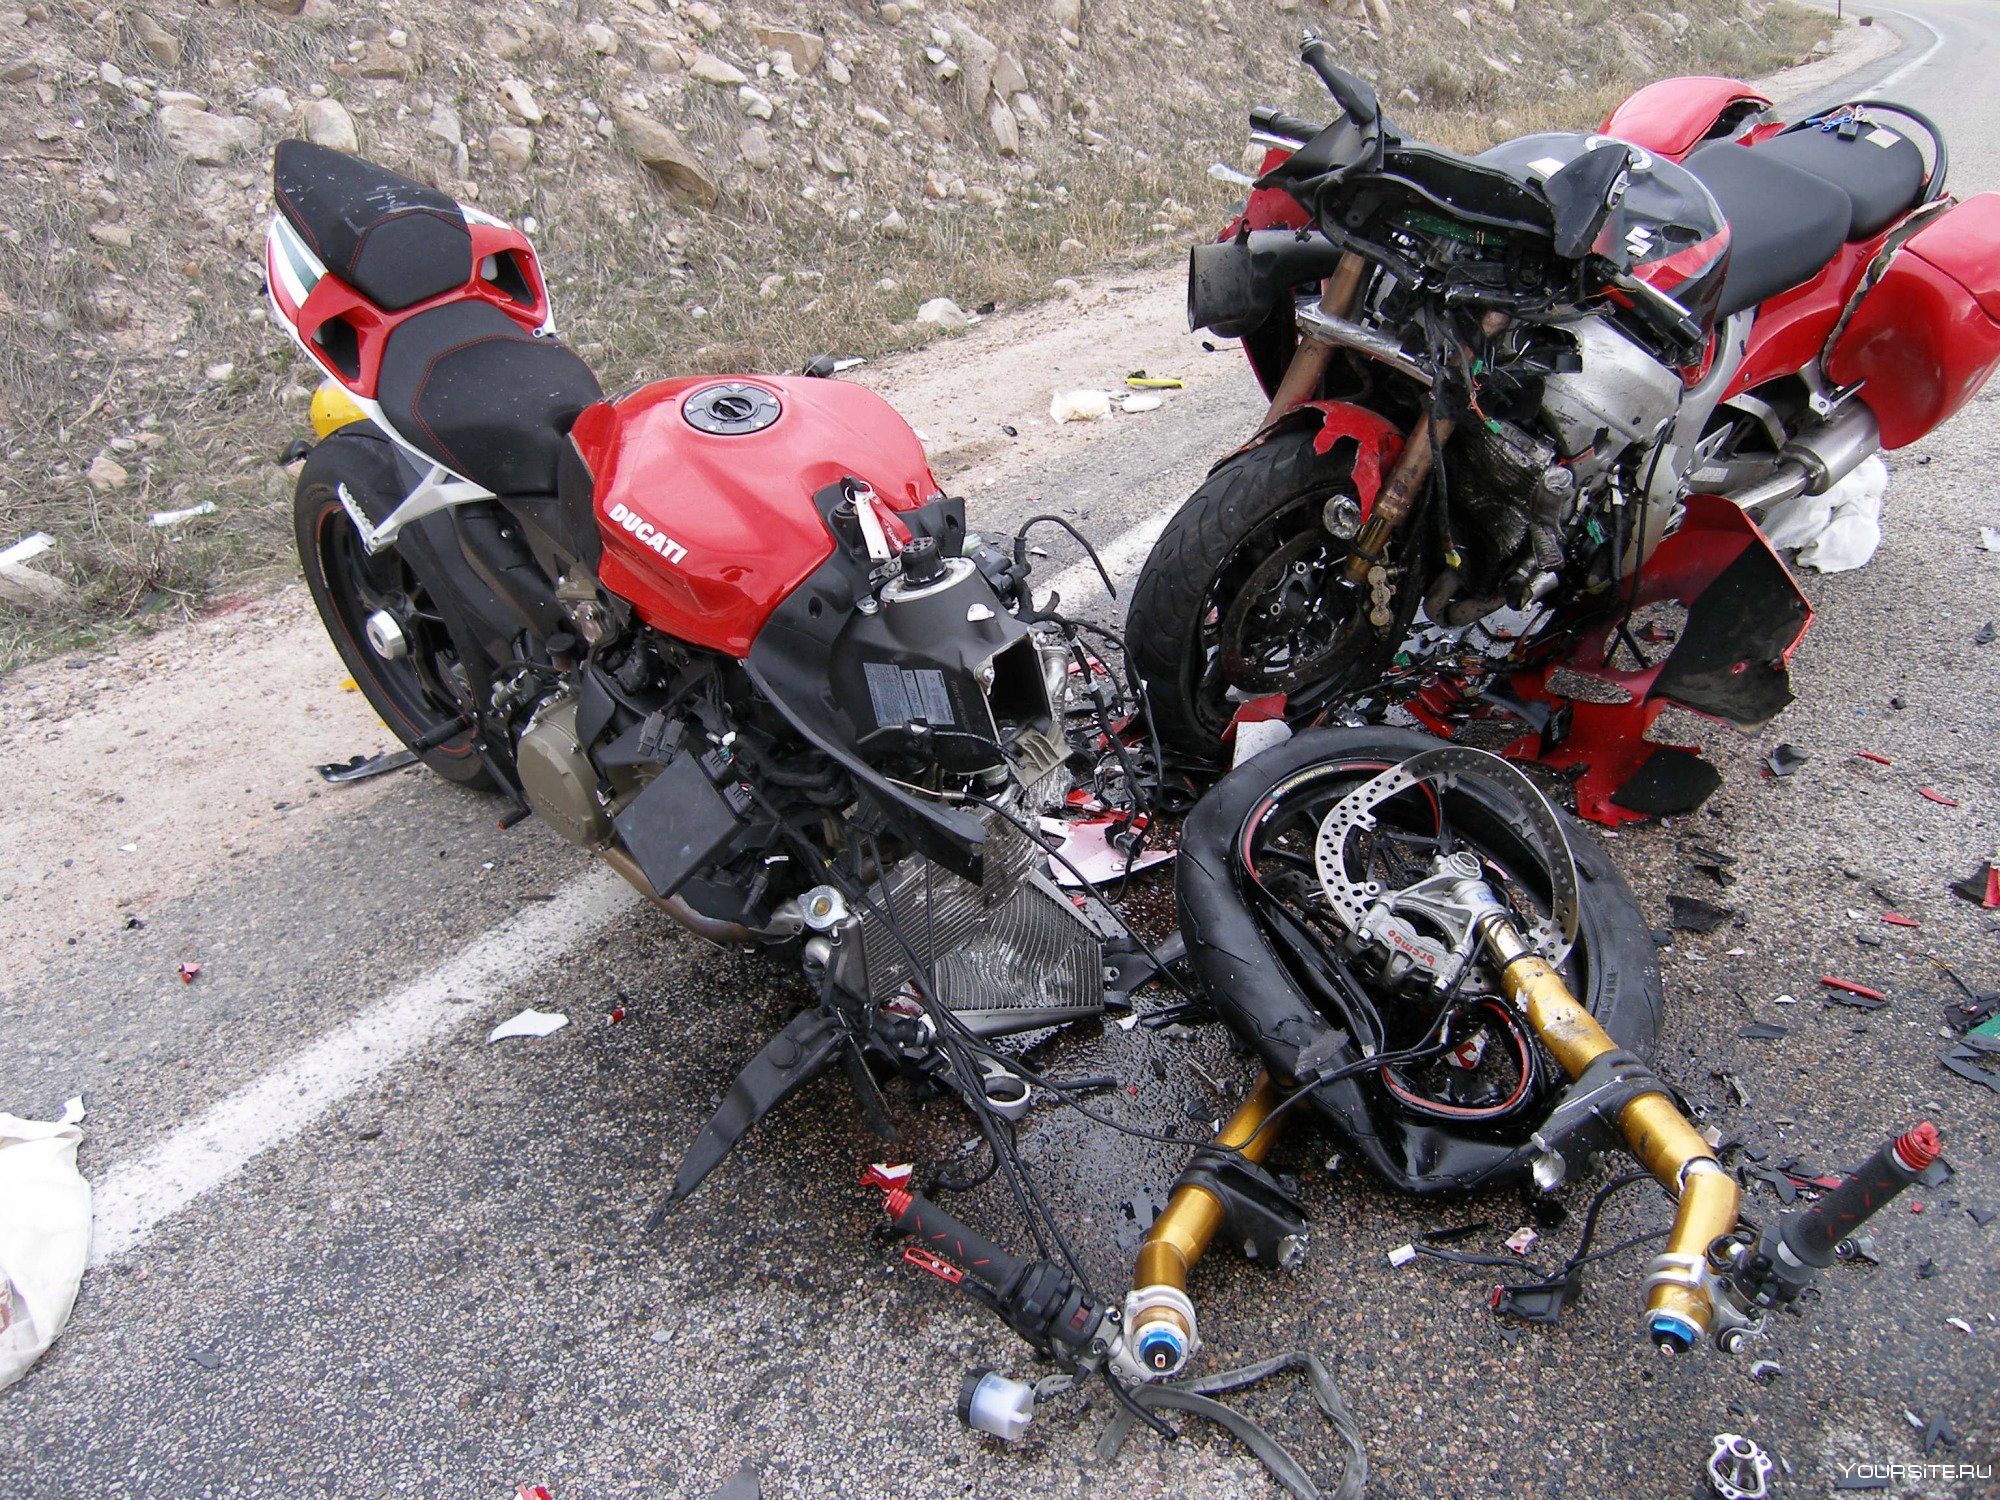 Разбил мотоцикл. Разбитый мотоцикл диабло р1. Разбитый красный Ямаха р1. Мотоцикл диабло р1 после аварии.